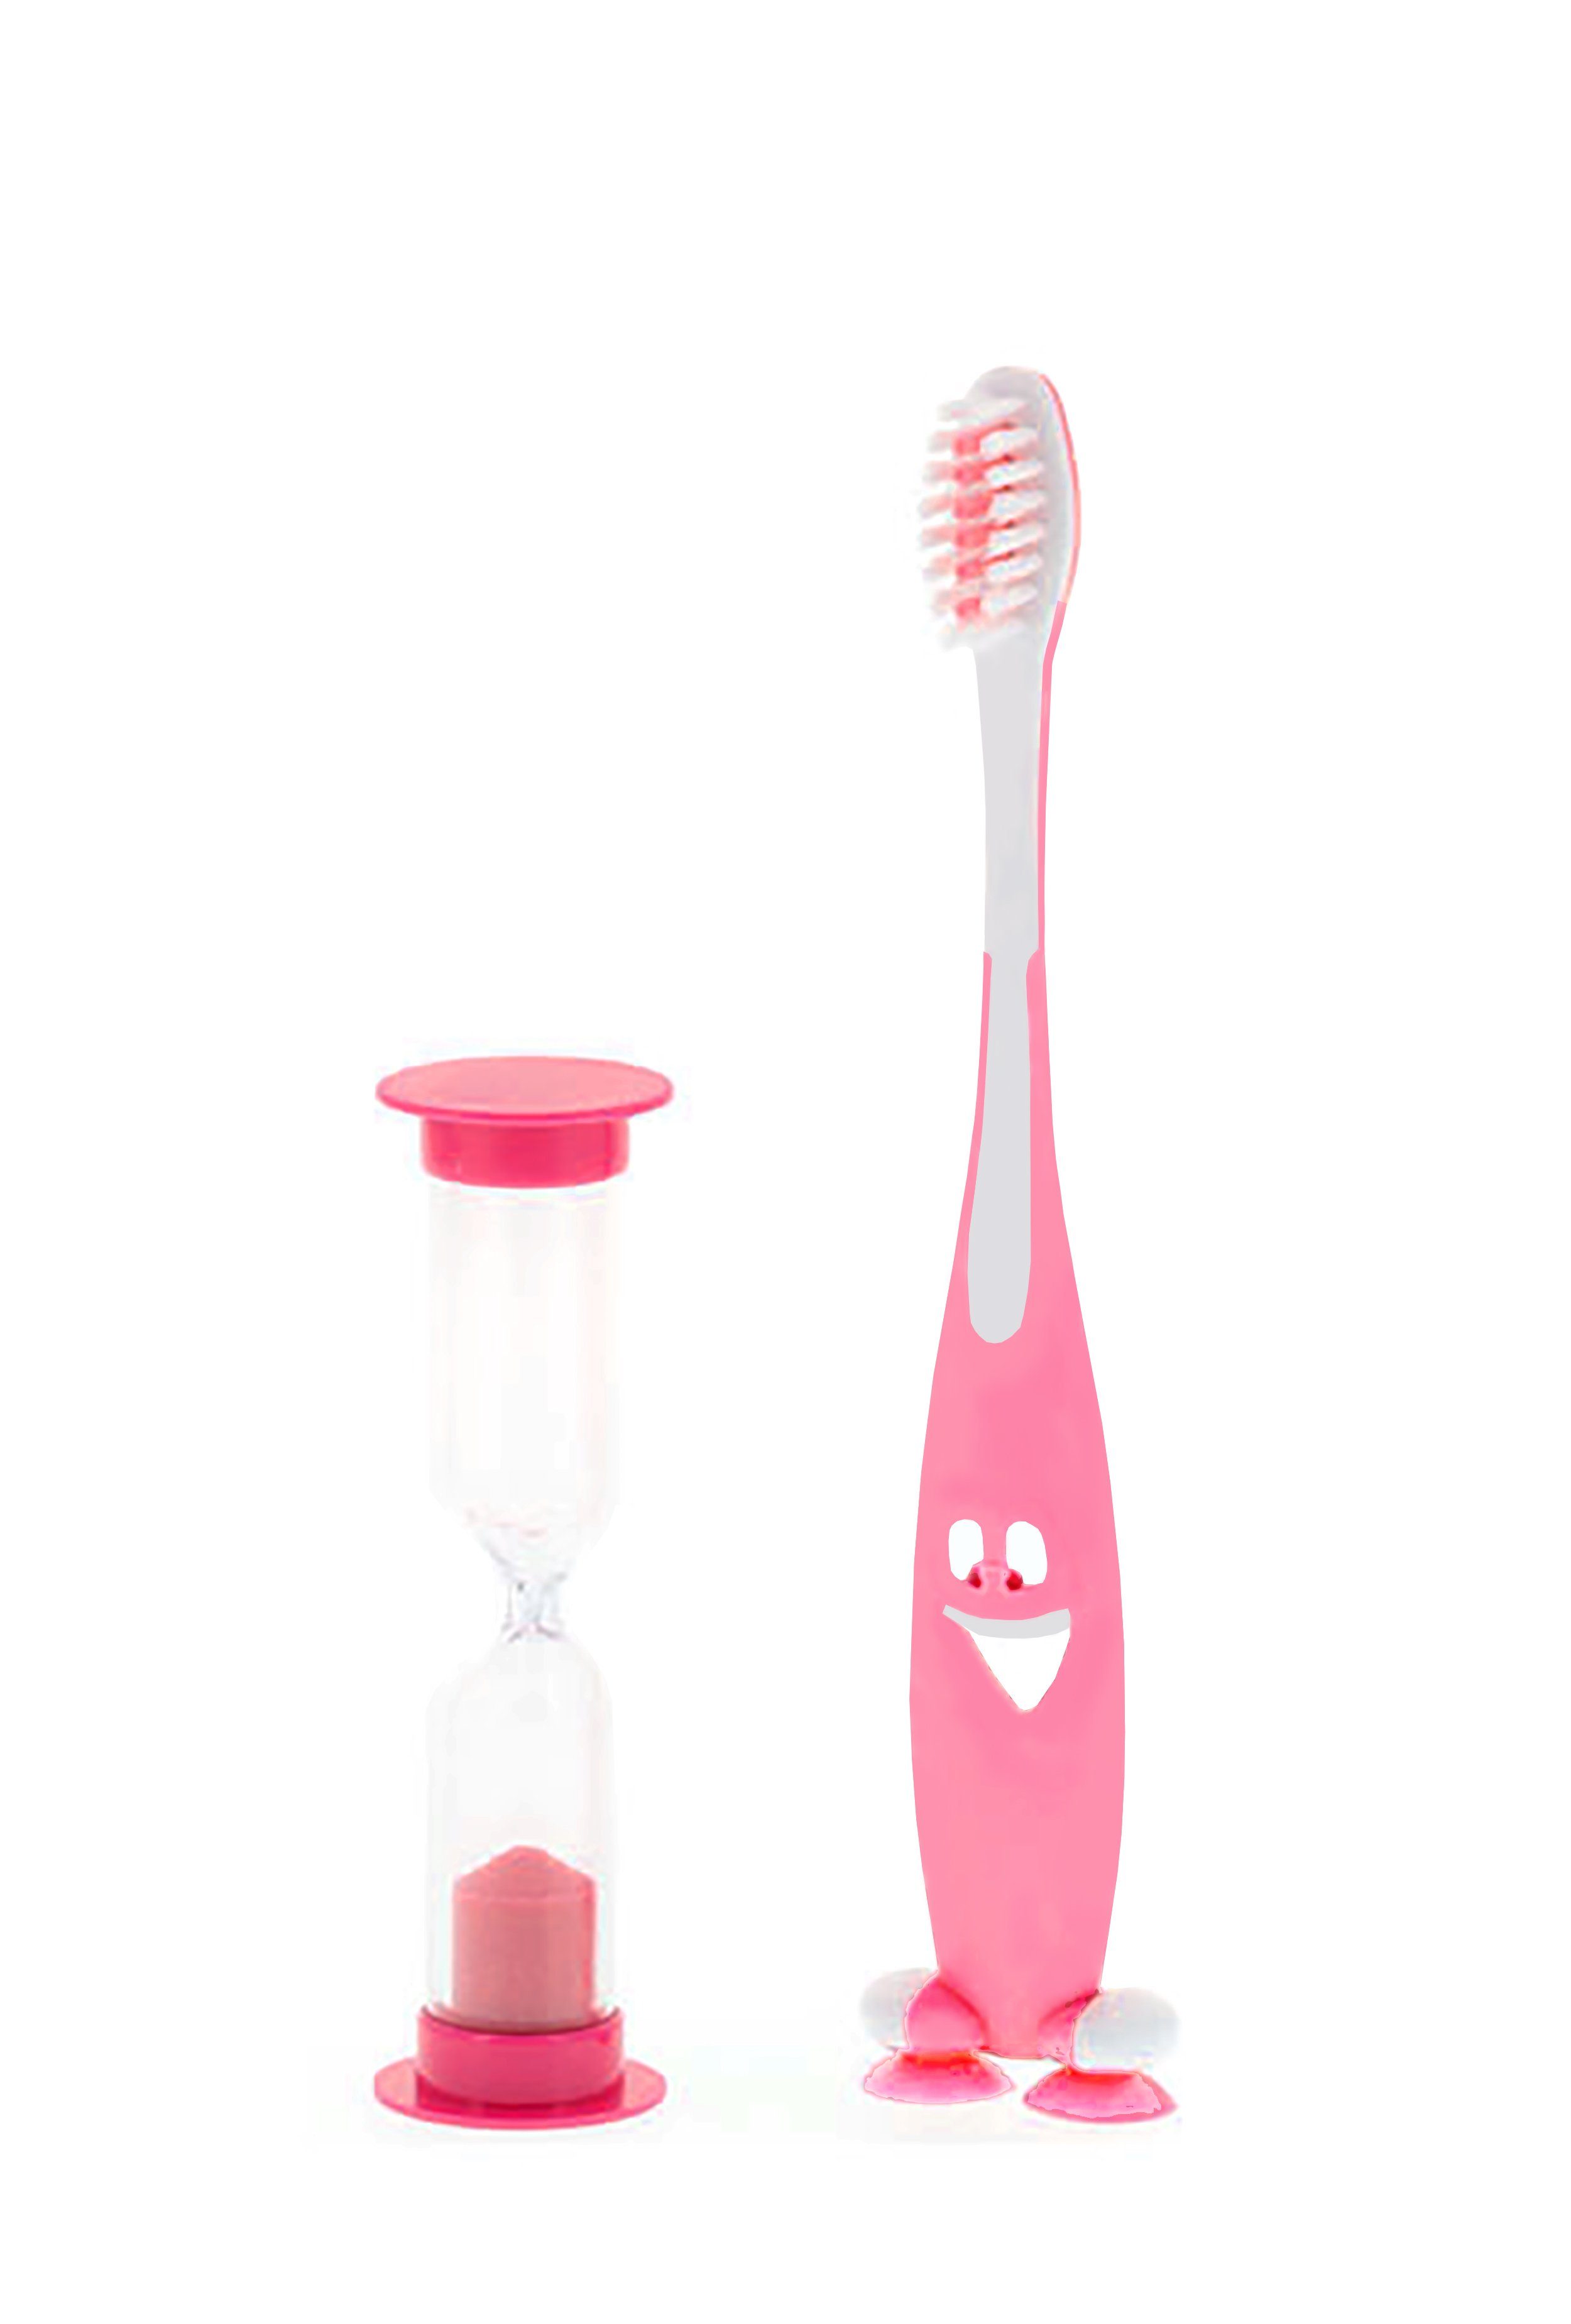 Zahnbürste KINDER ZAHNBÜRSTE mit Sanduhr Zahnputzuhr Kinderzahnbürste 23 (Rosa), Kinderbürste